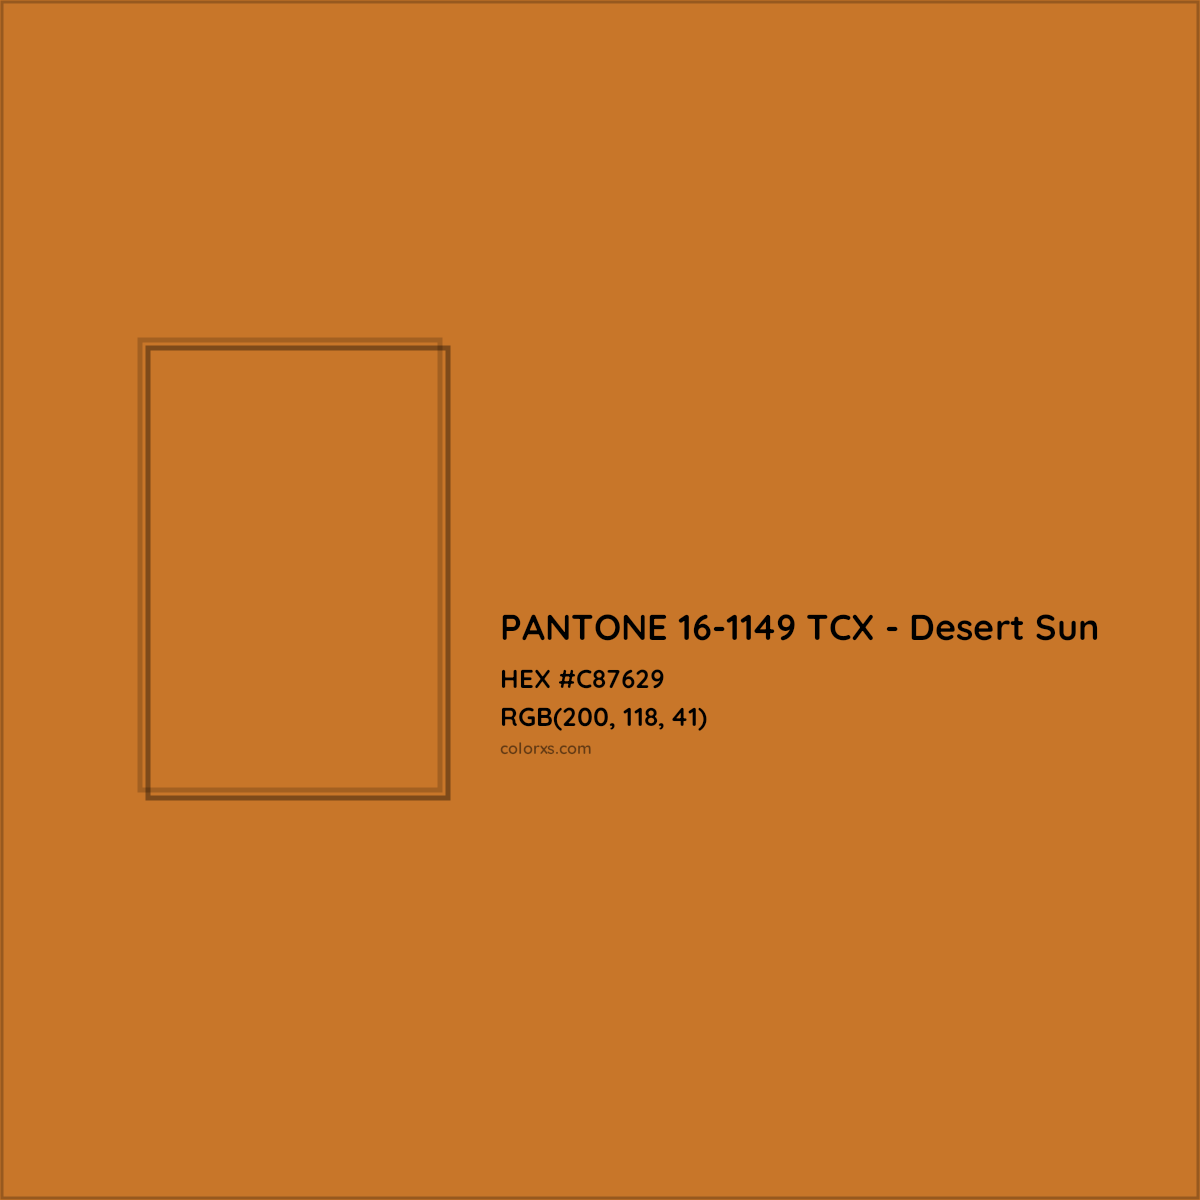 HEX #C87629 PANTONE 16-1149 TCX - Desert Sun CMS Pantone TCX - Color Code